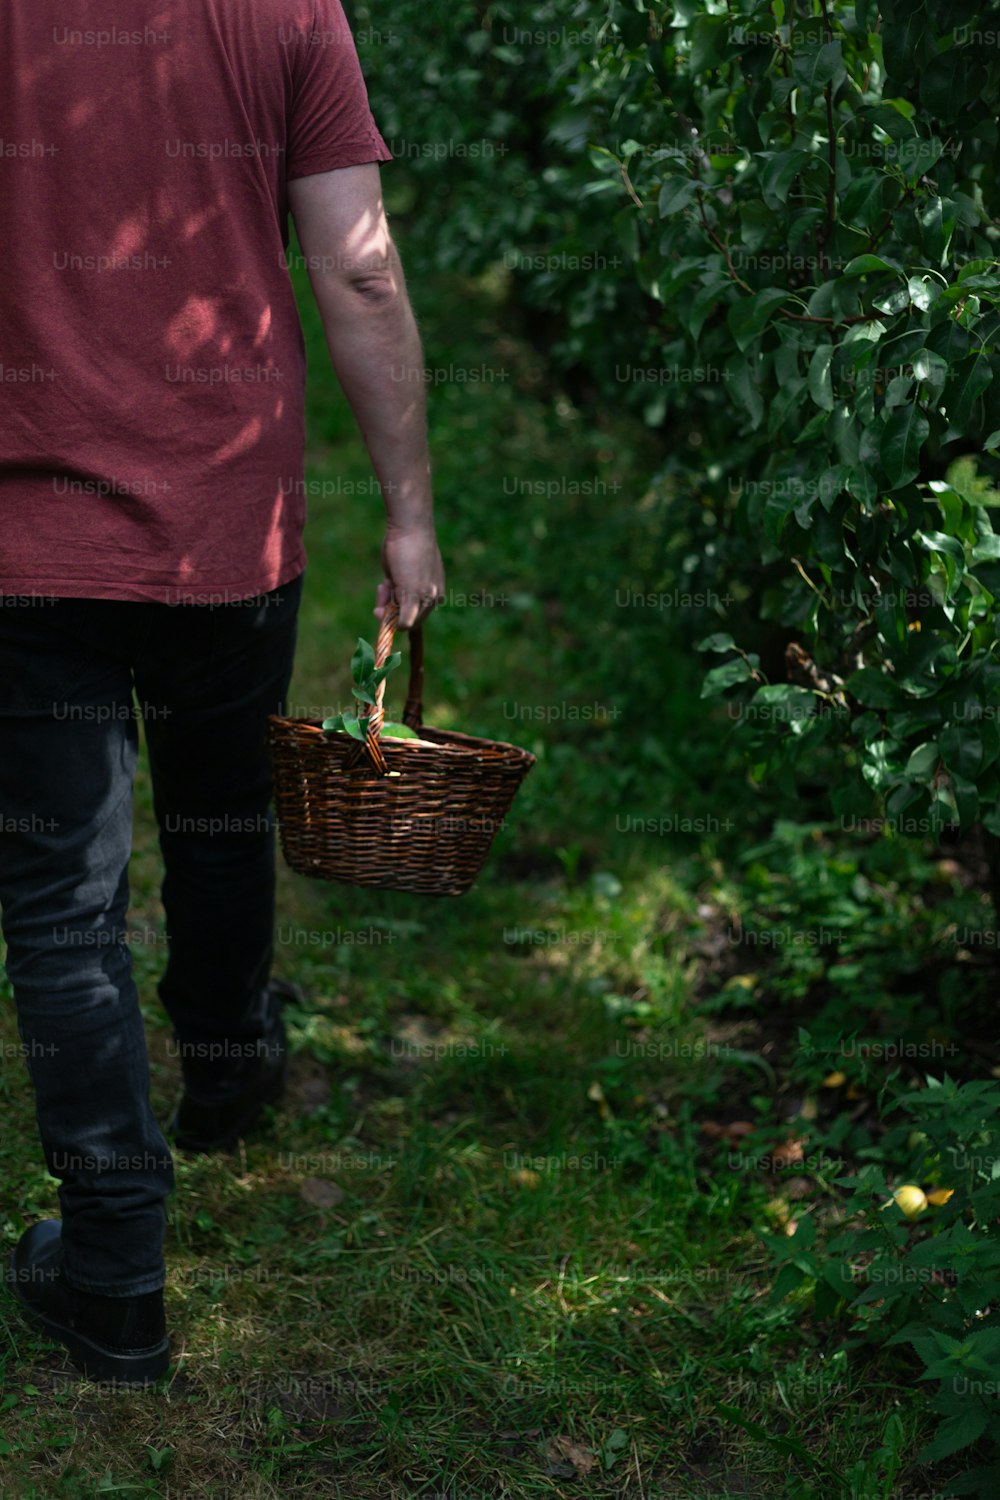 a man holding a basket walking through a forest